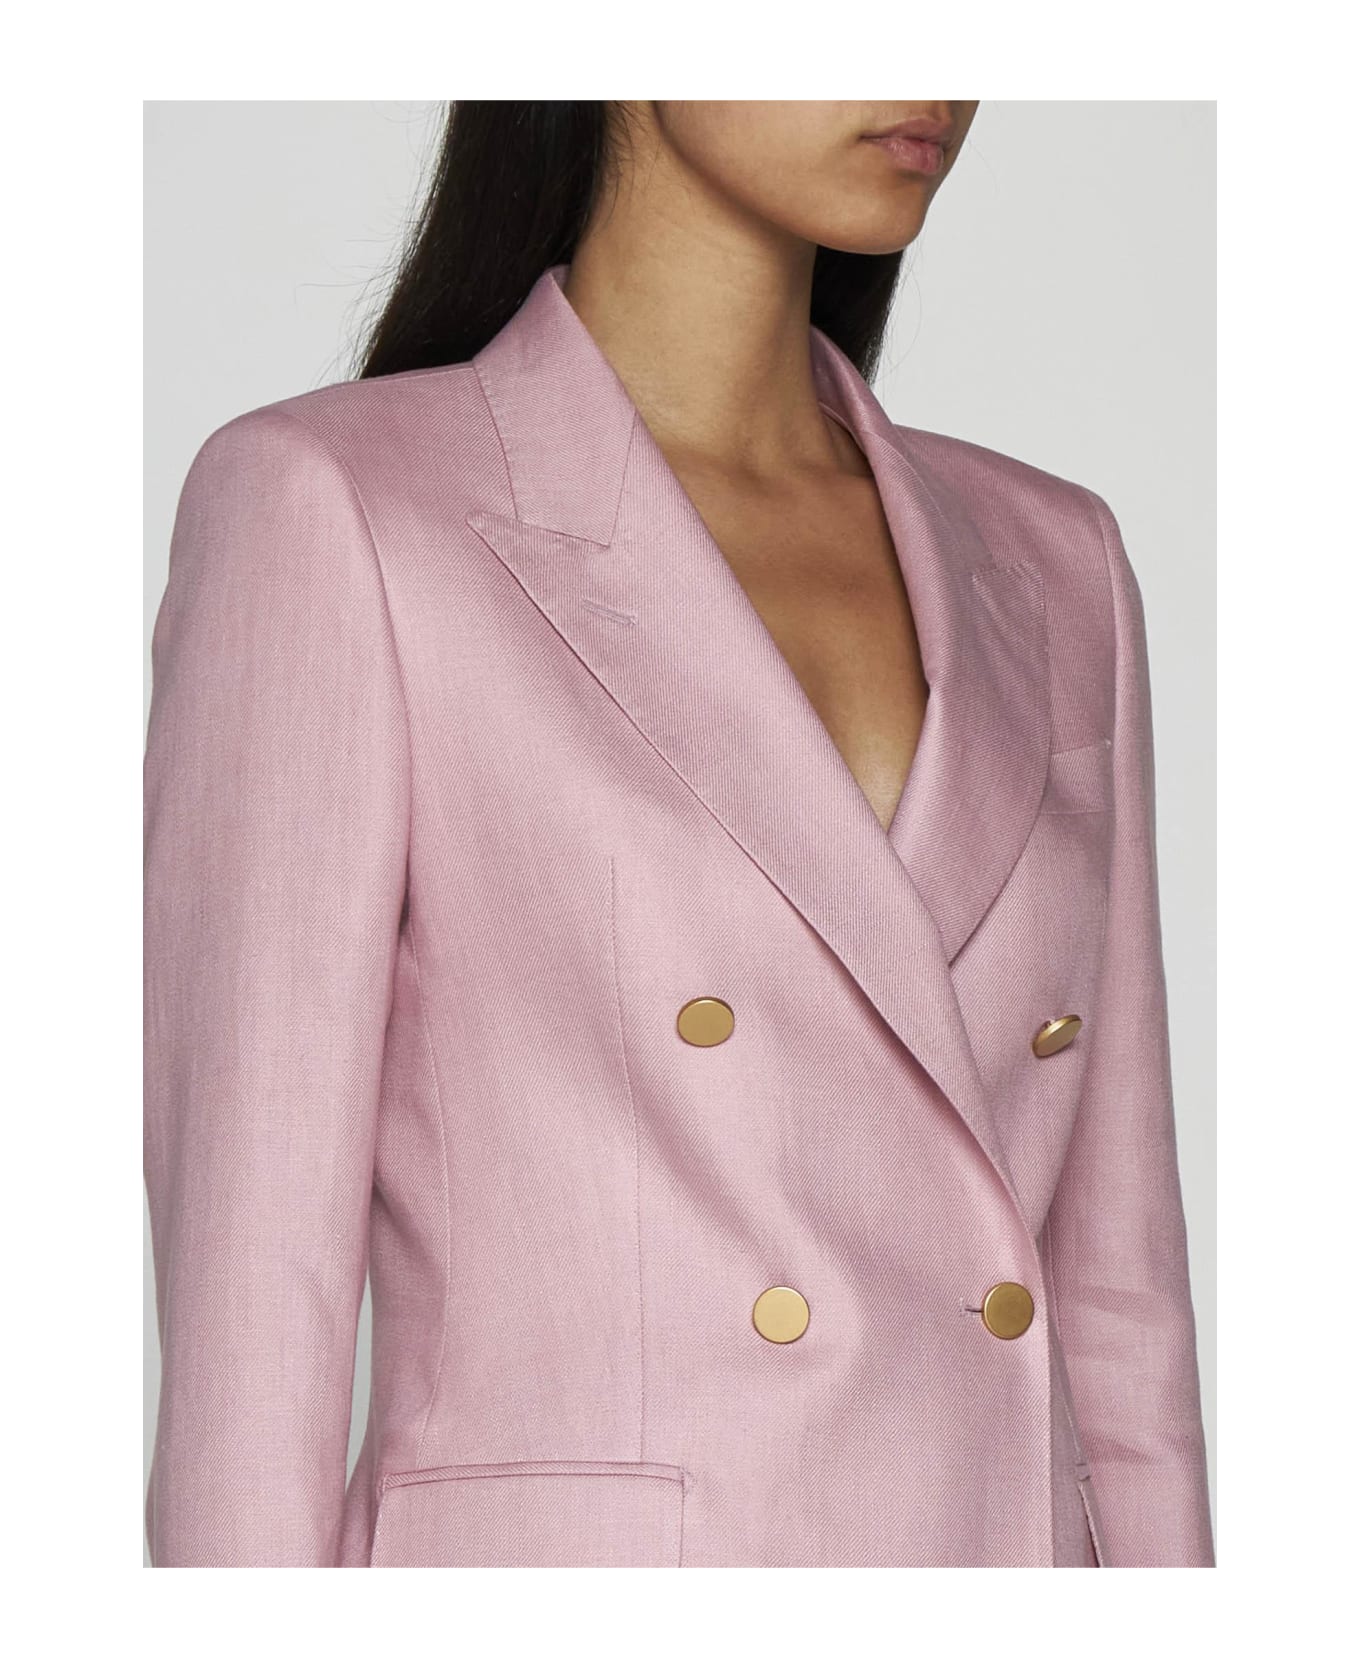 Tagliatore Parigi Double-breasted Linen Suit - Pink